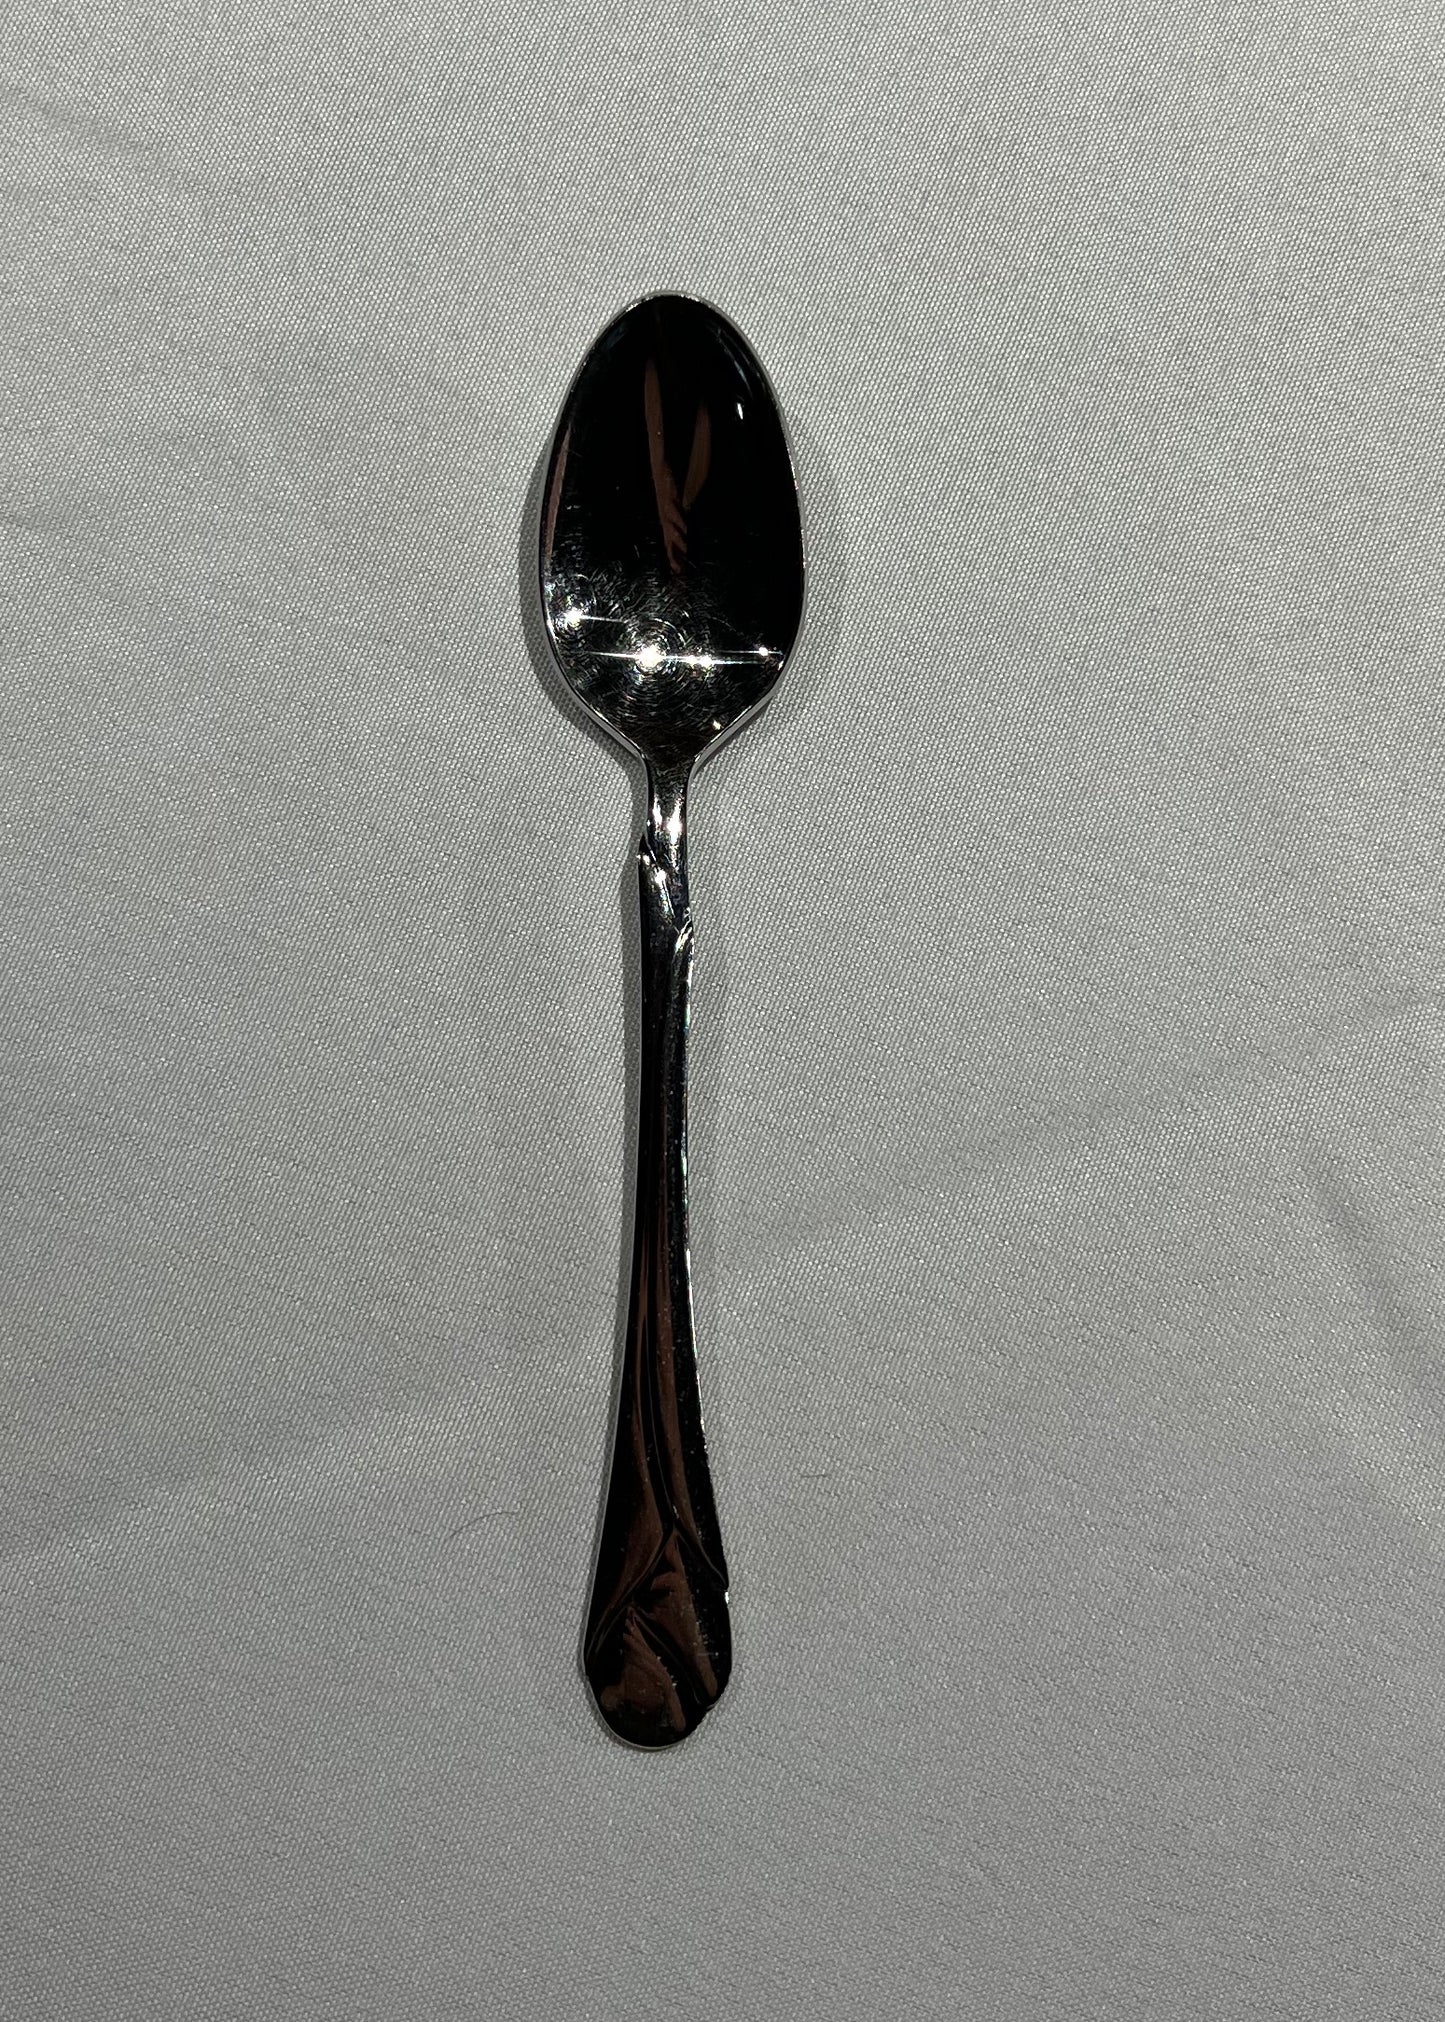 Stainless Dinner Spoon